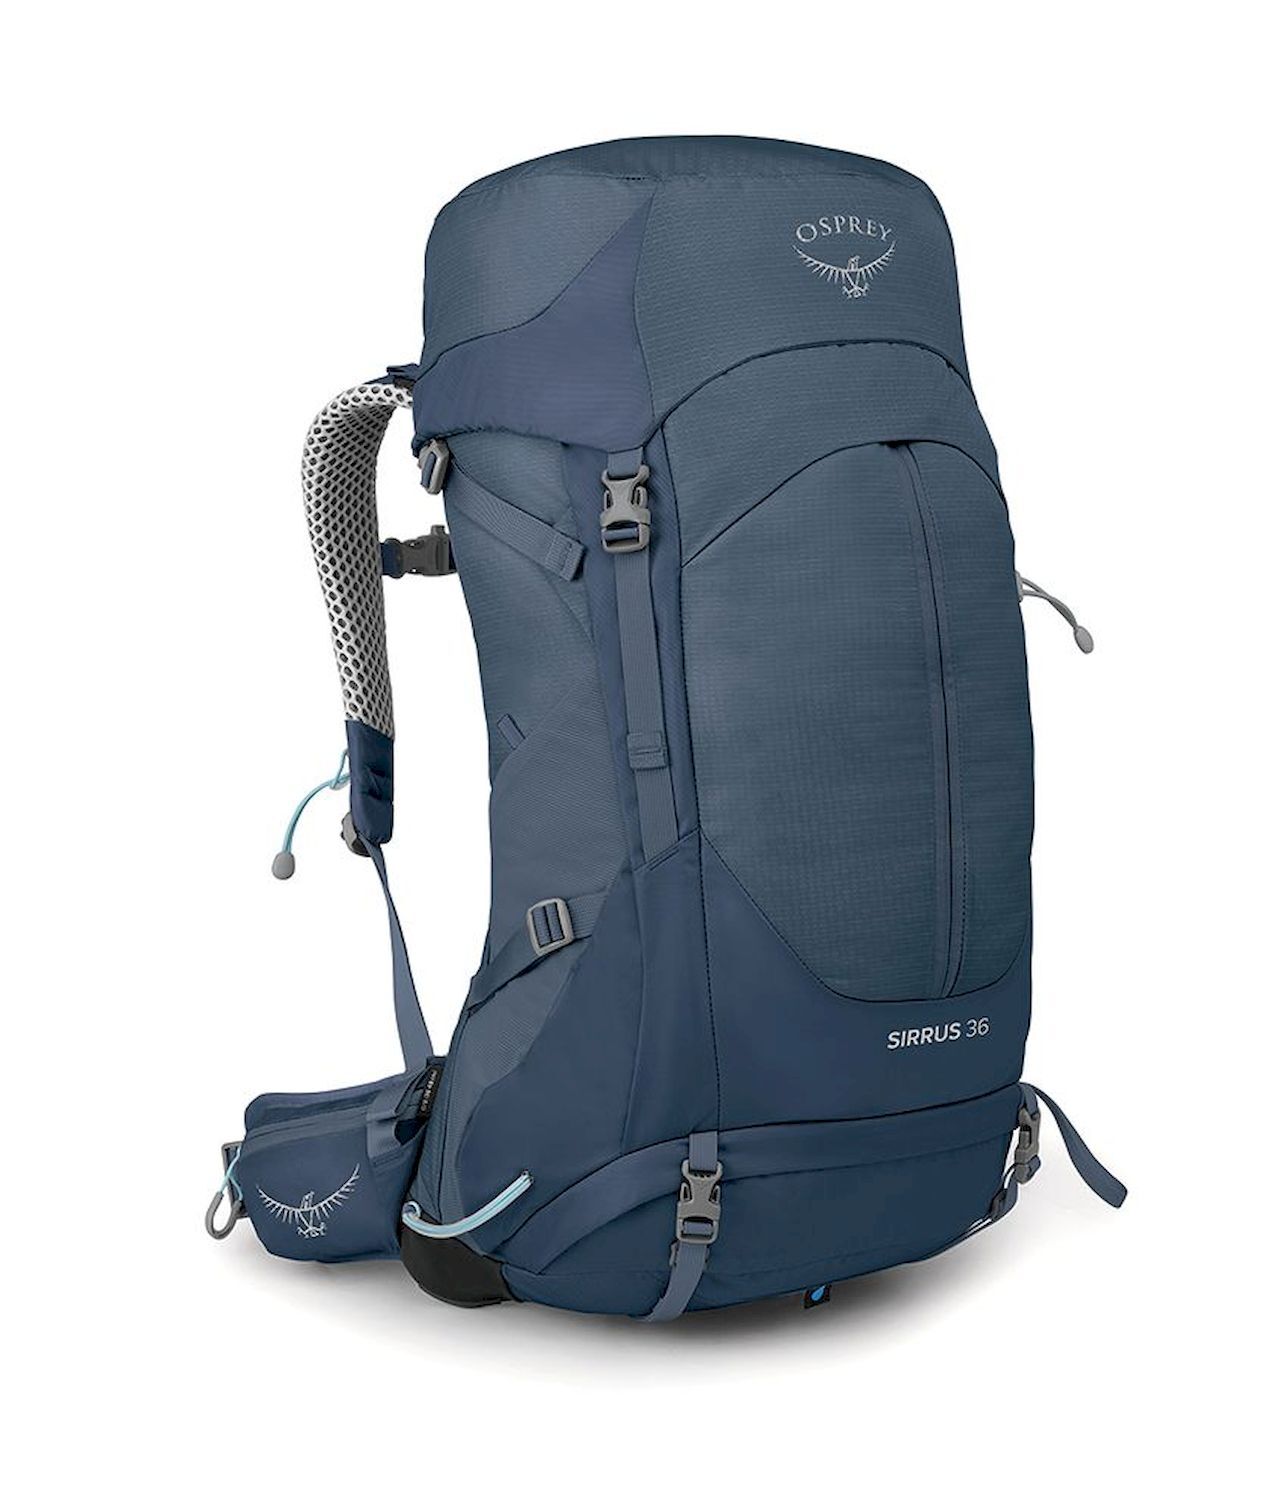 Osprey Sirrus 36 - Walking backpack - Women's